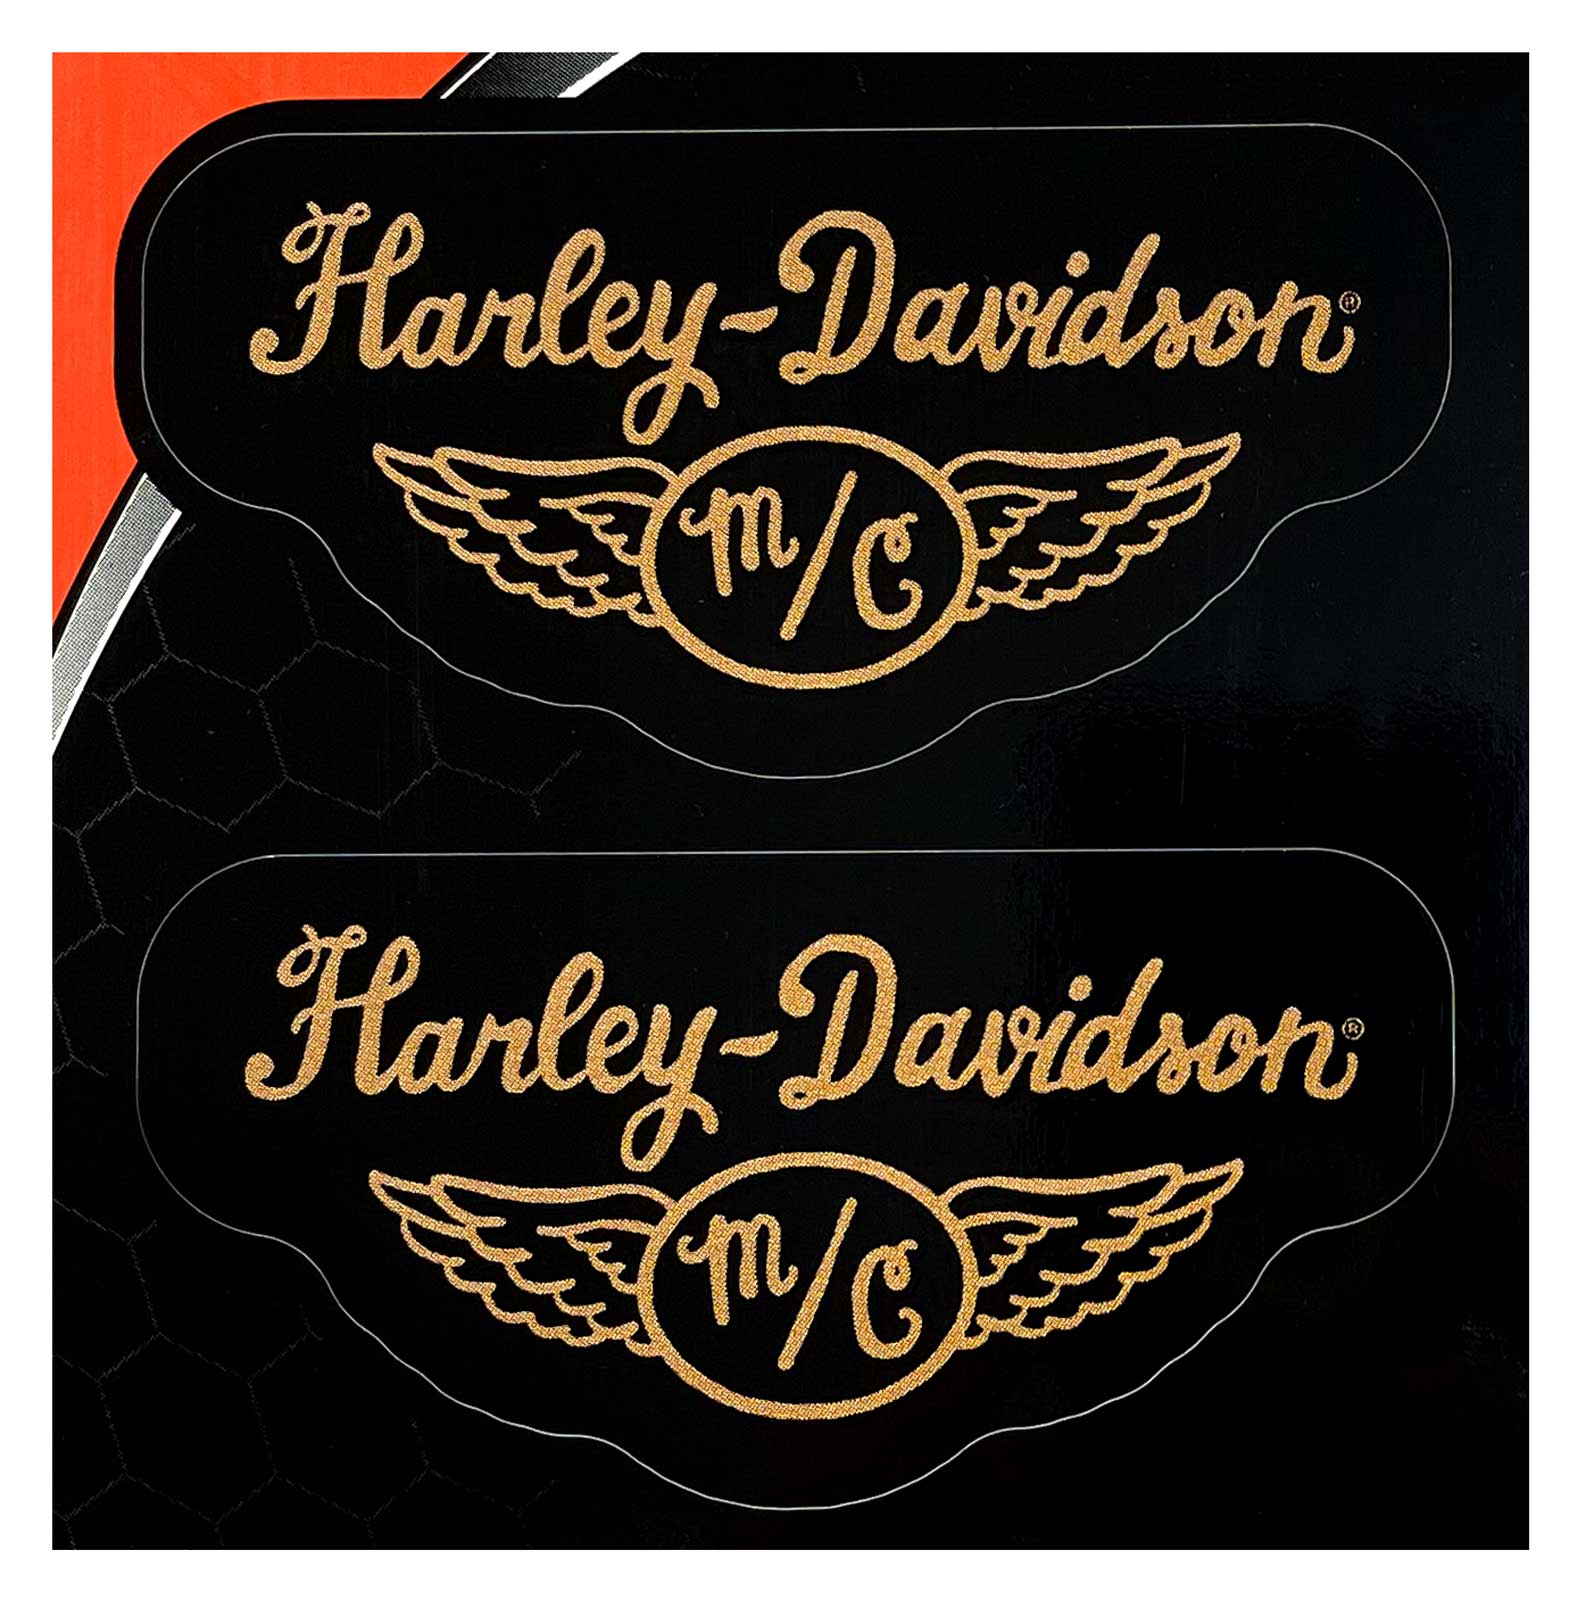 Harley-Davidson wings (4.5